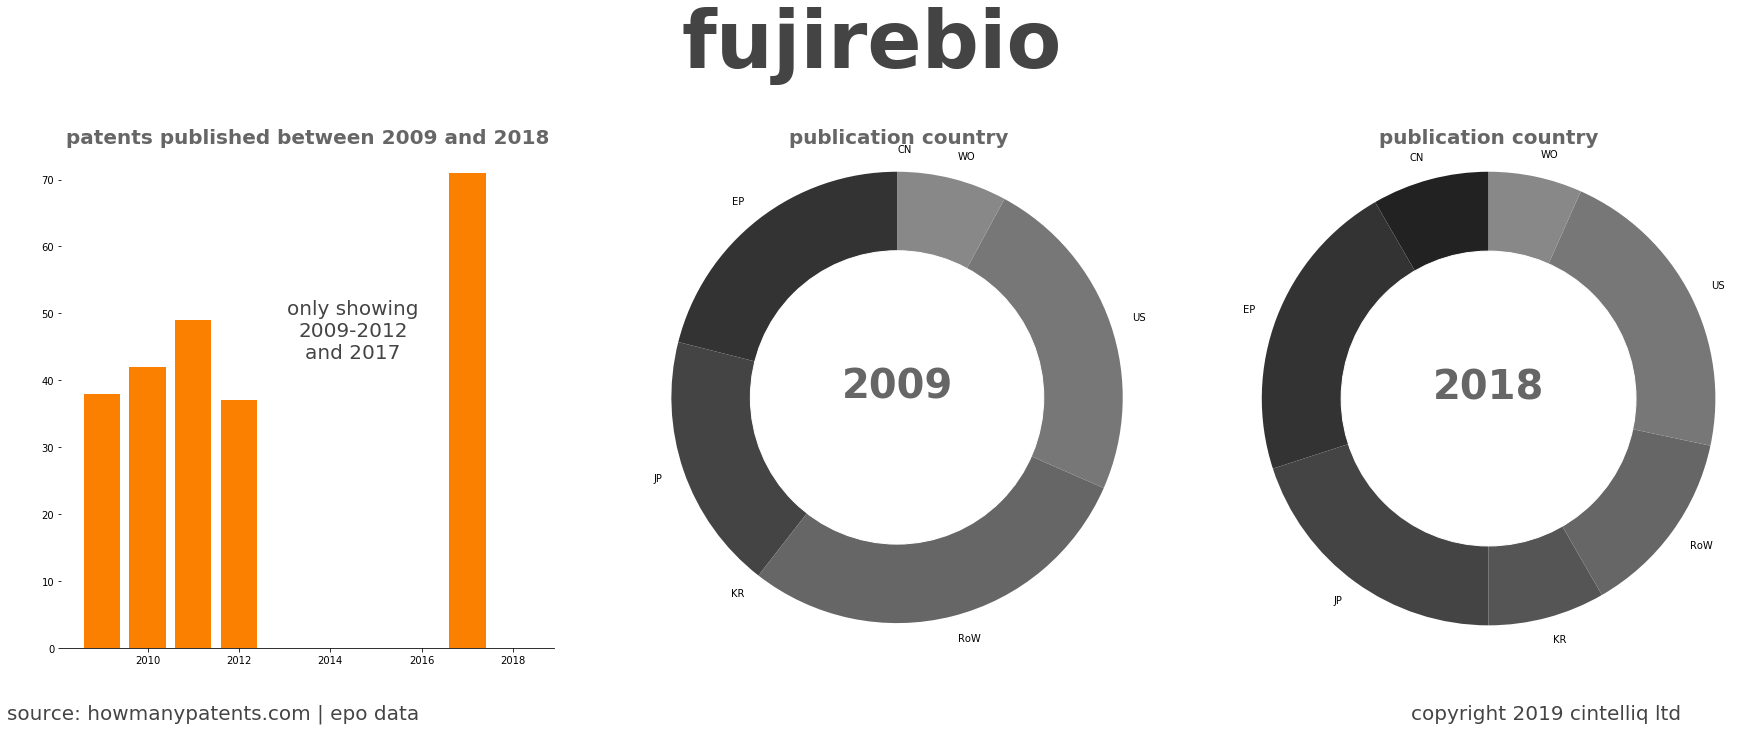 summary of patents for Fujirebio